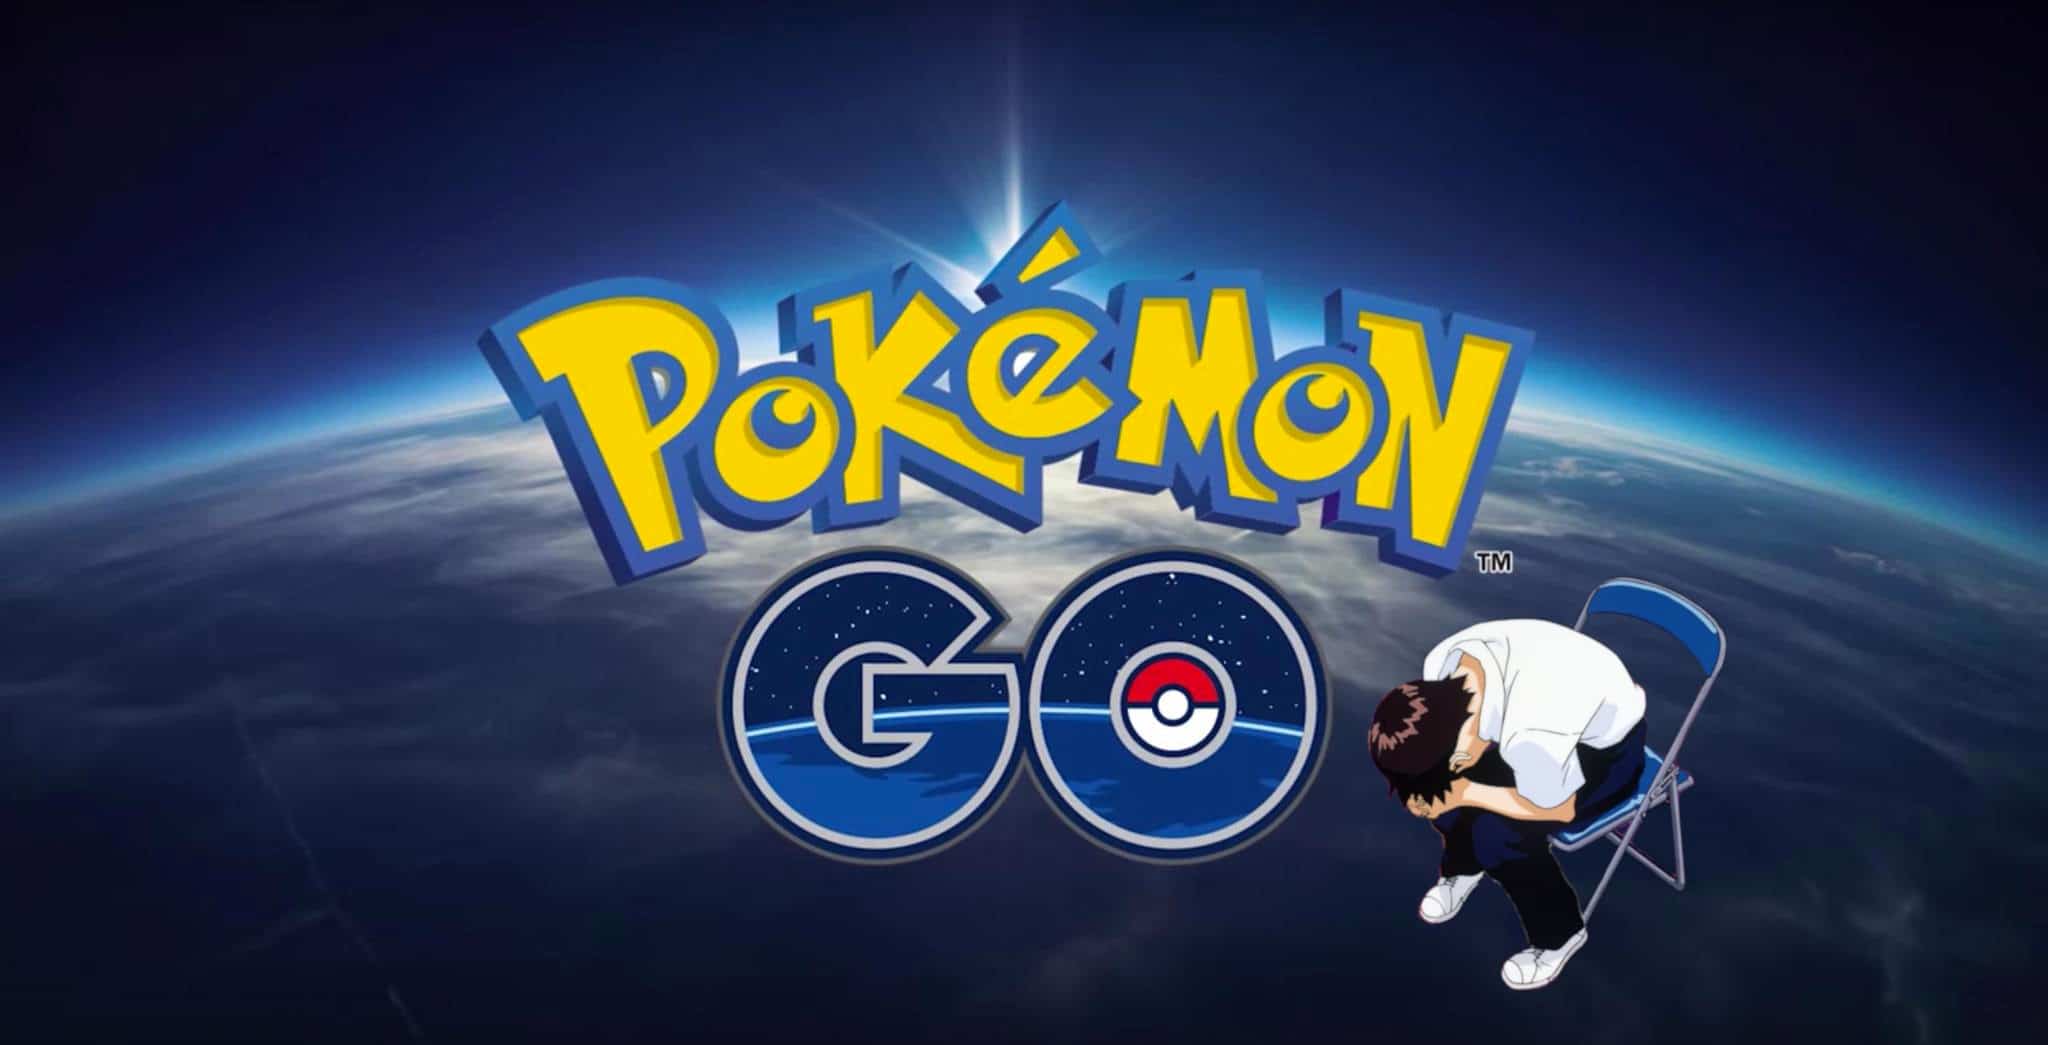 the Pokémon Go logo, with Shinji Ikari superimposed looking sad